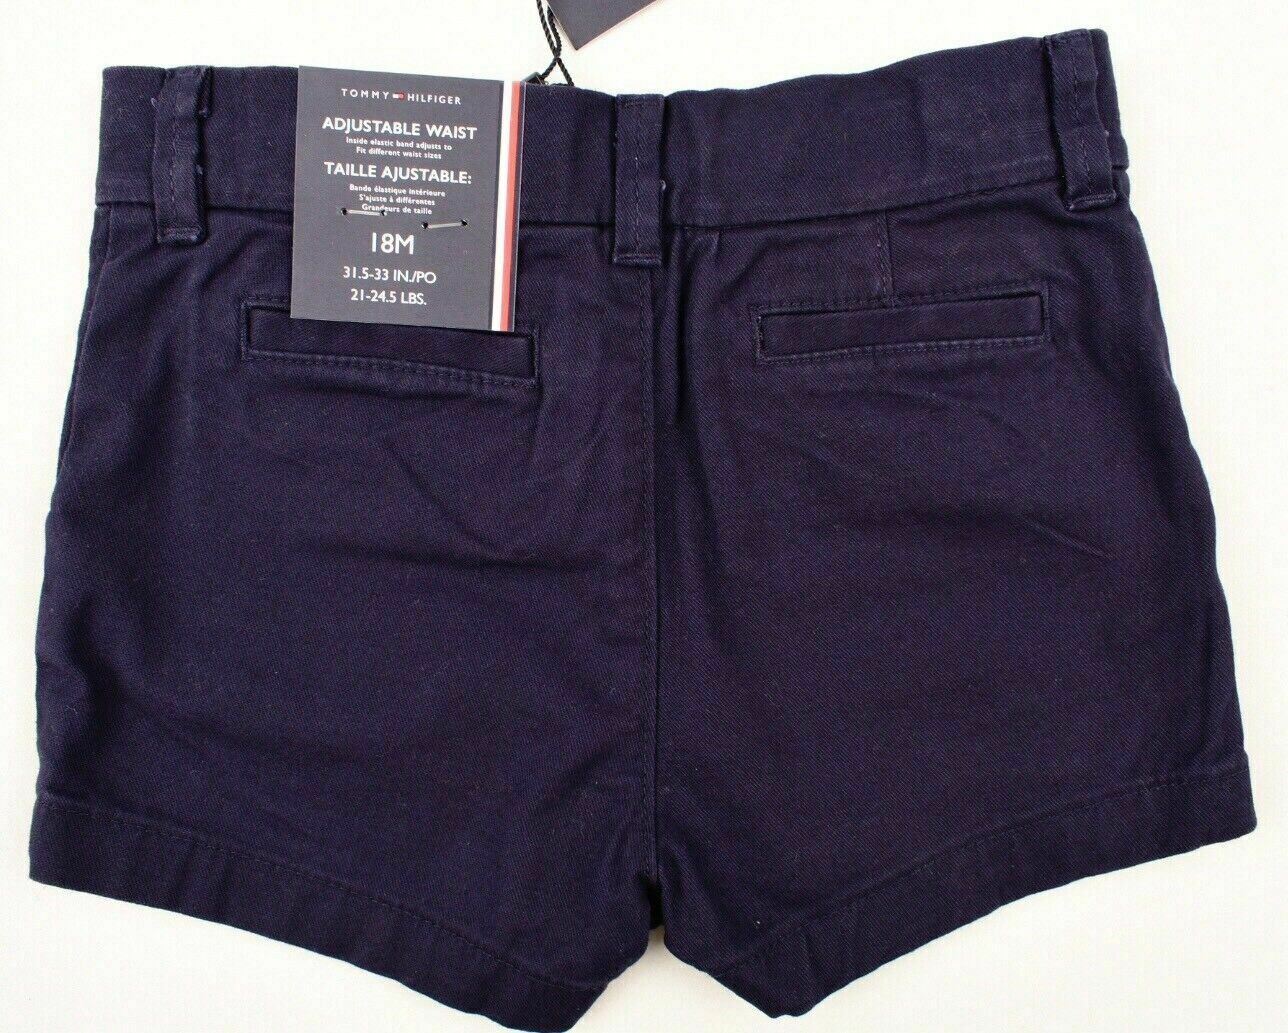 TOMMY HILFIGER Baby Girls' Adjustable Waist Shorts, Navy Blue size 18 months